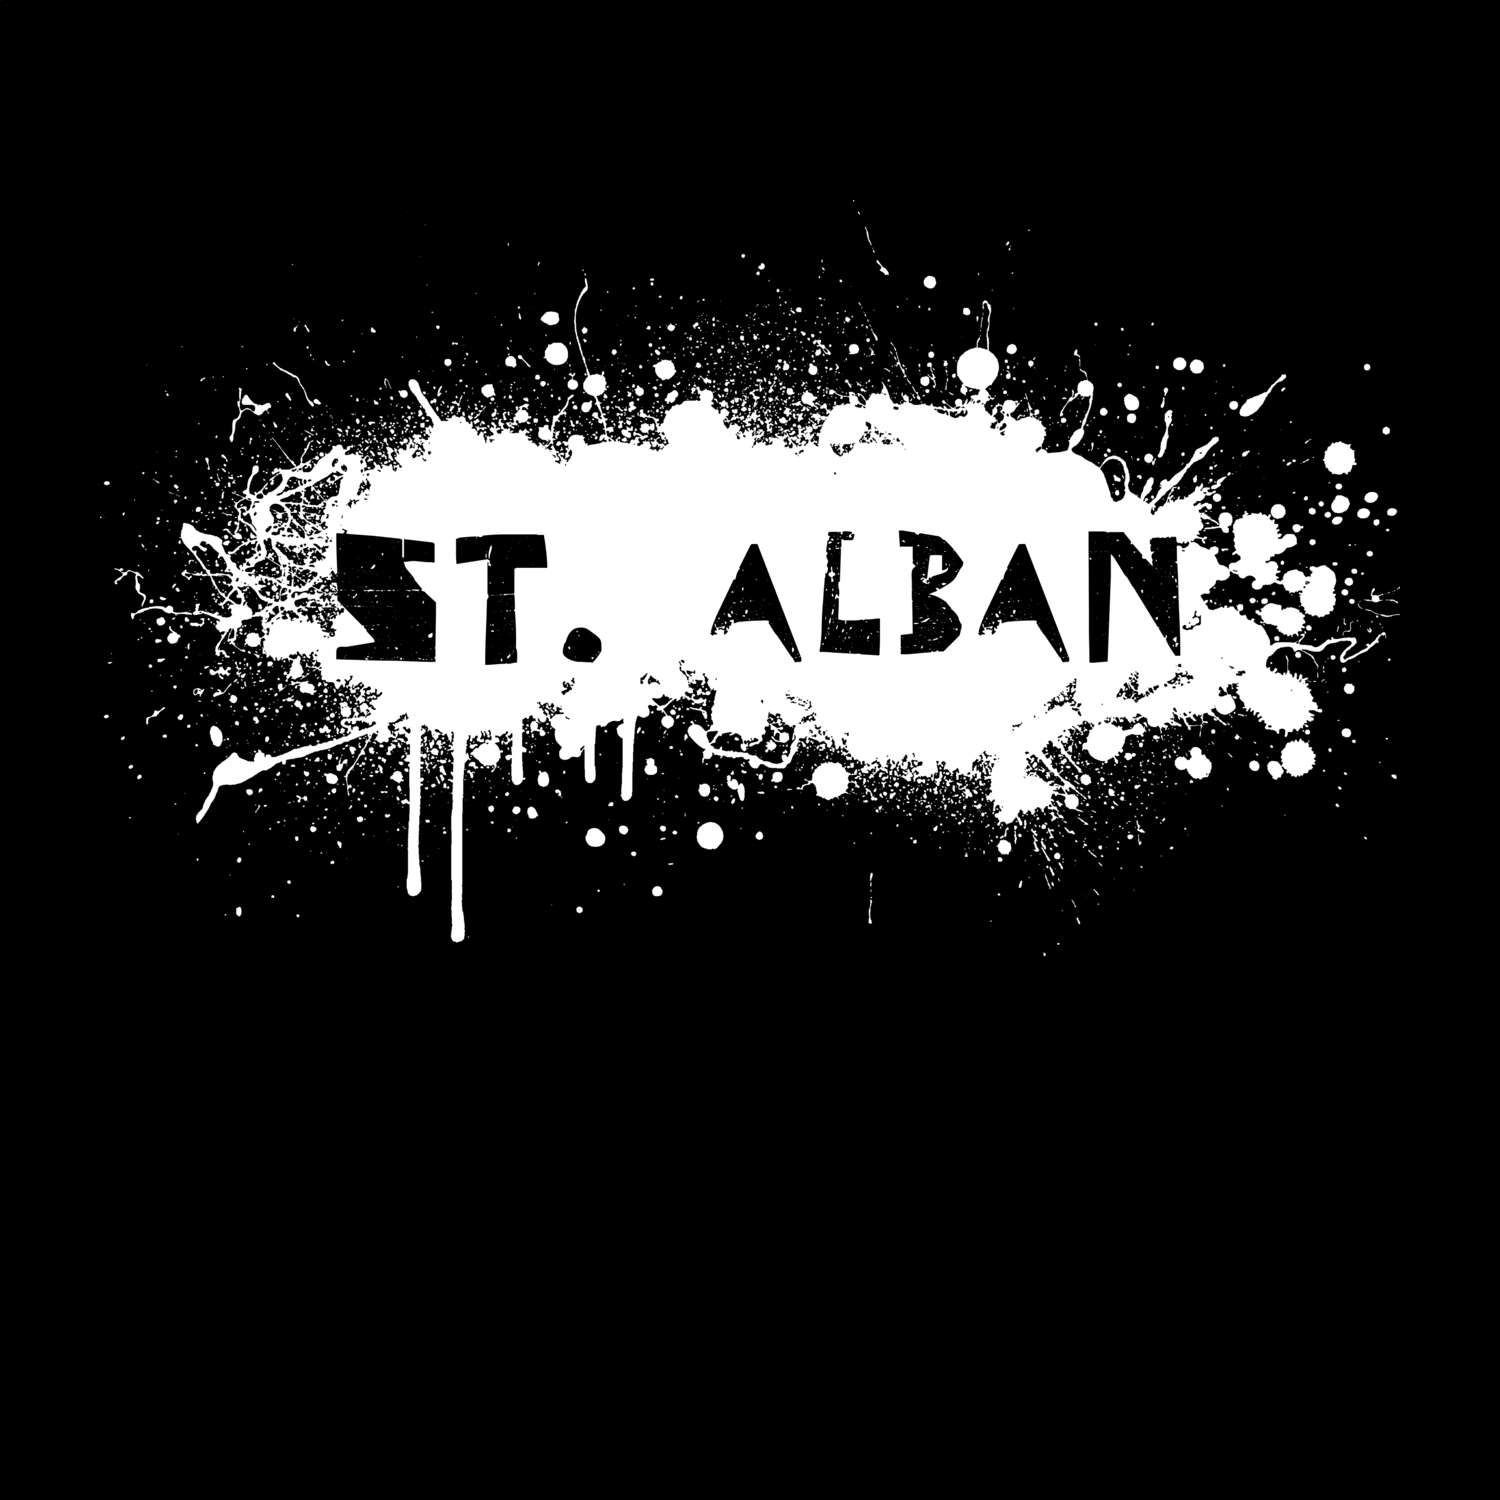 St. Alban T-Shirt »Paint Splash Punk«